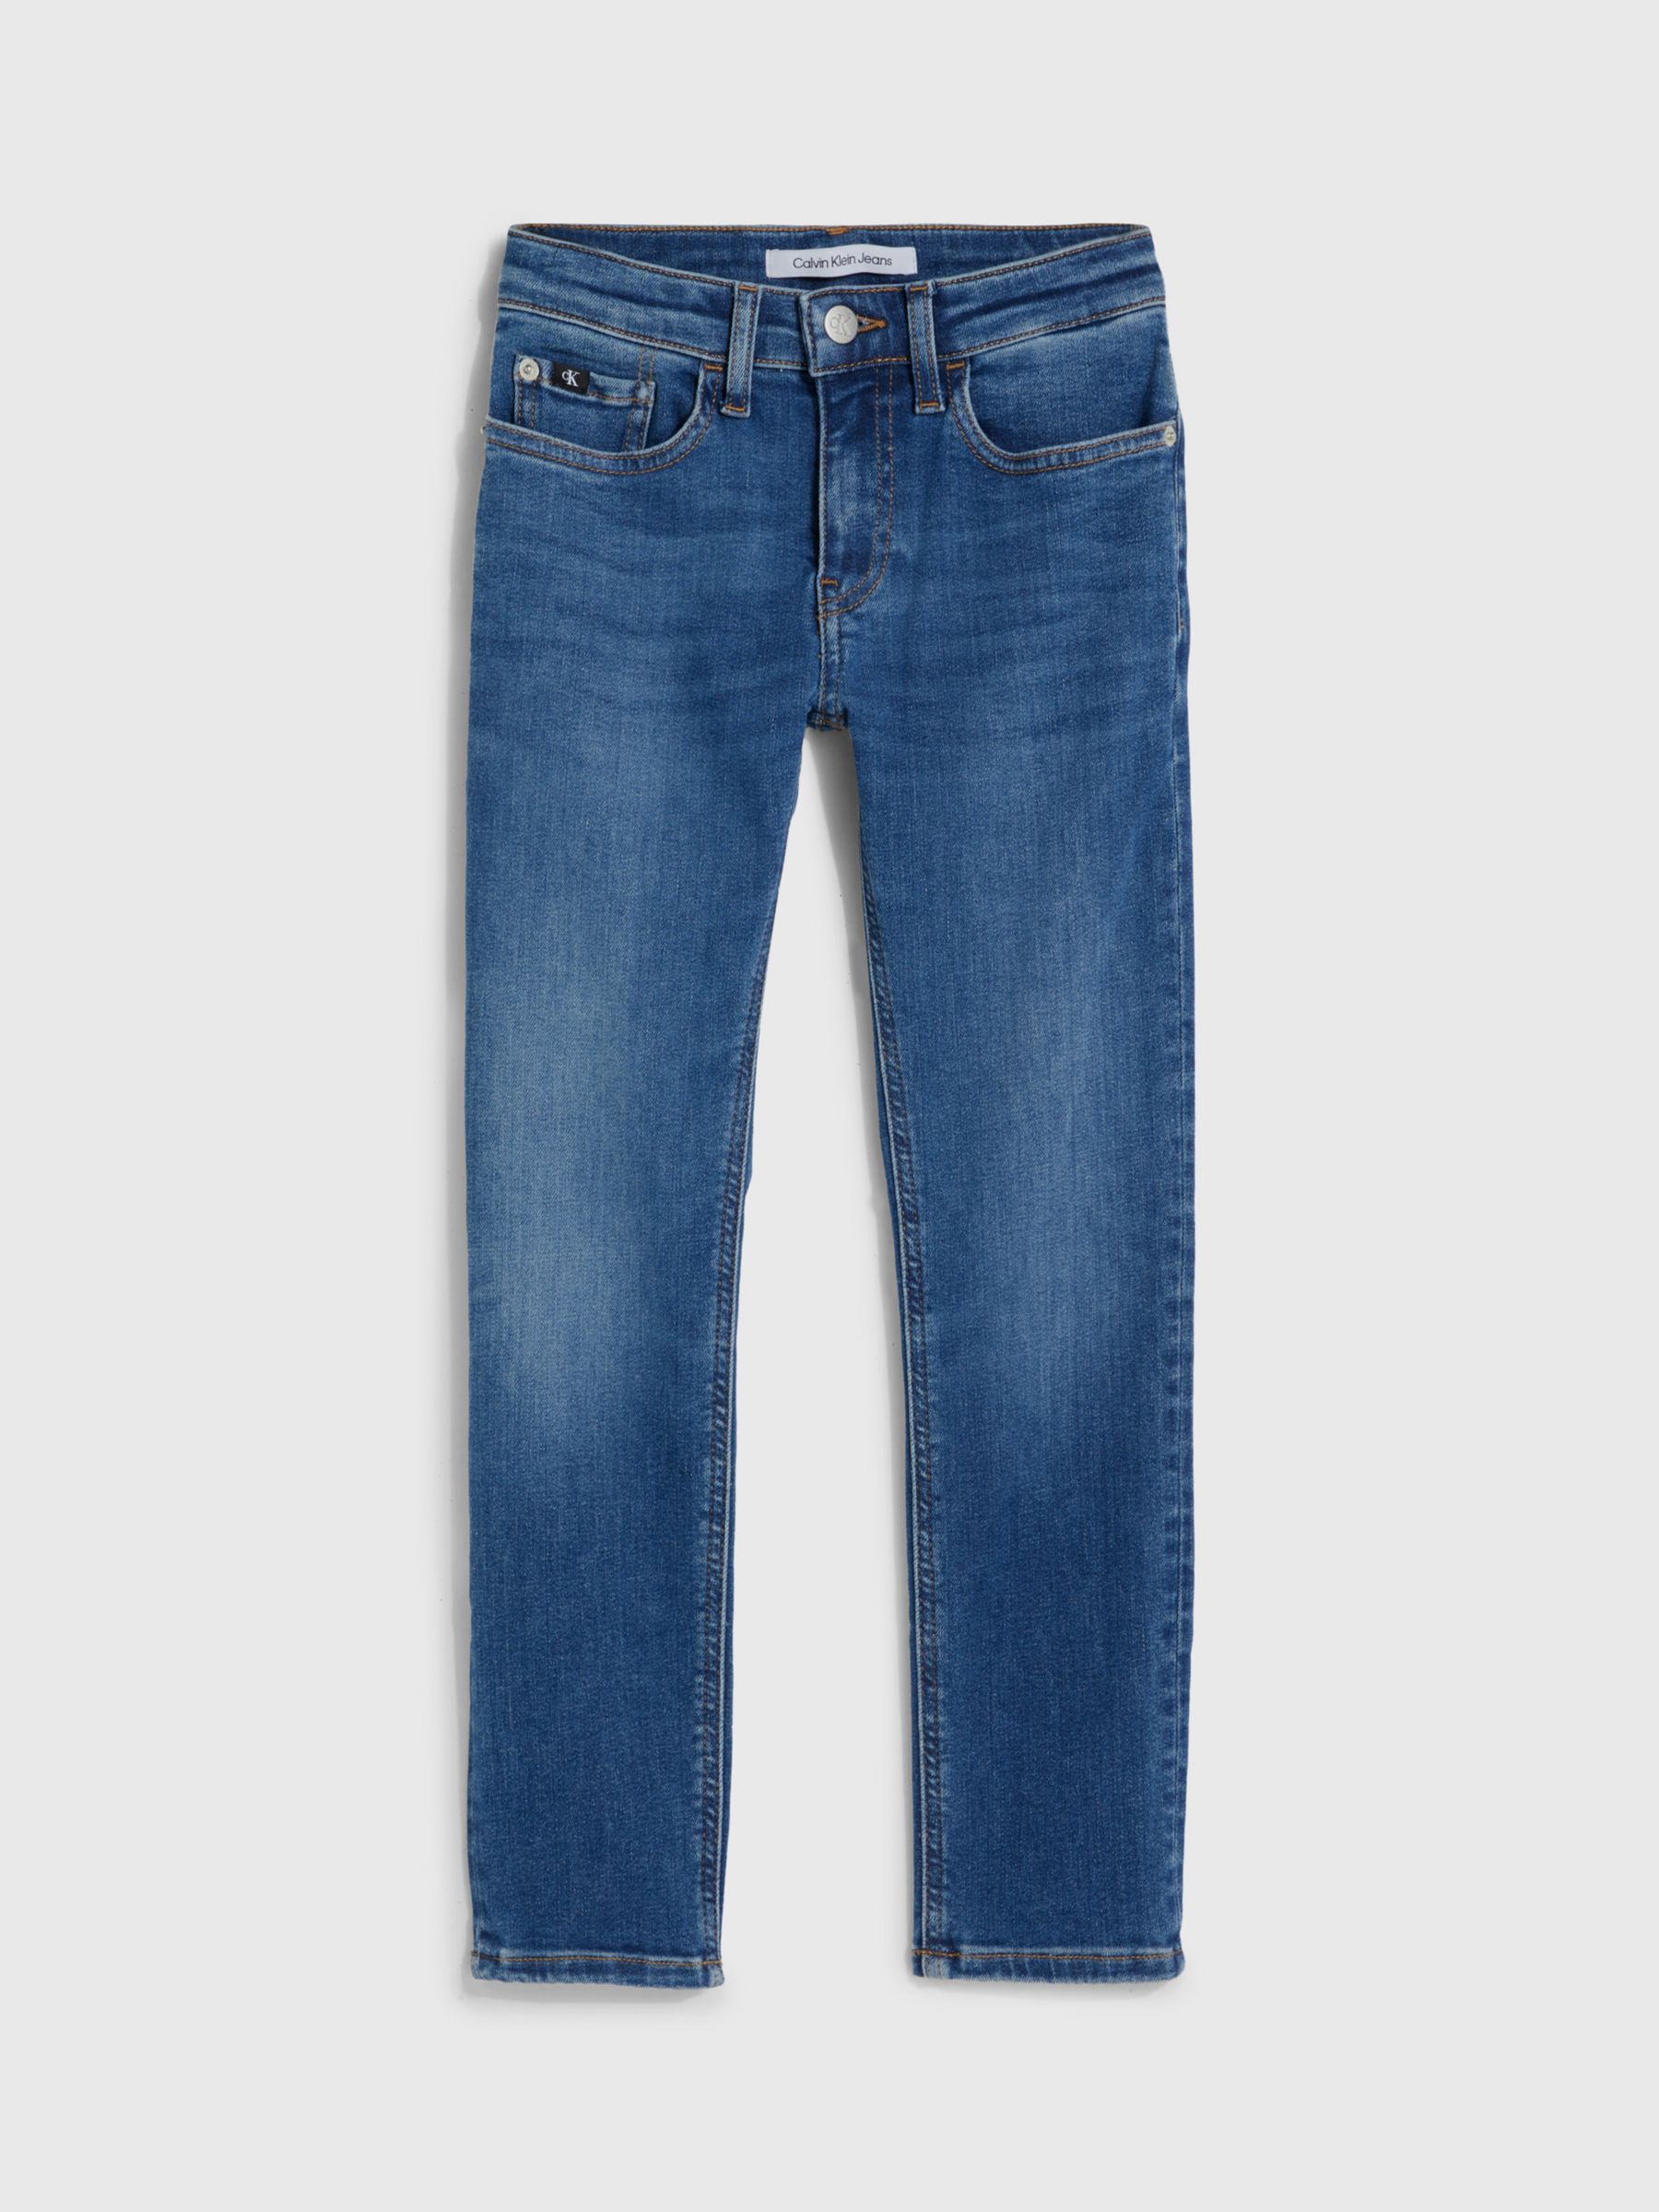 Calvin Klein Kids' Slim Essential Jeans, Mid Blue at John Lewis & Partners